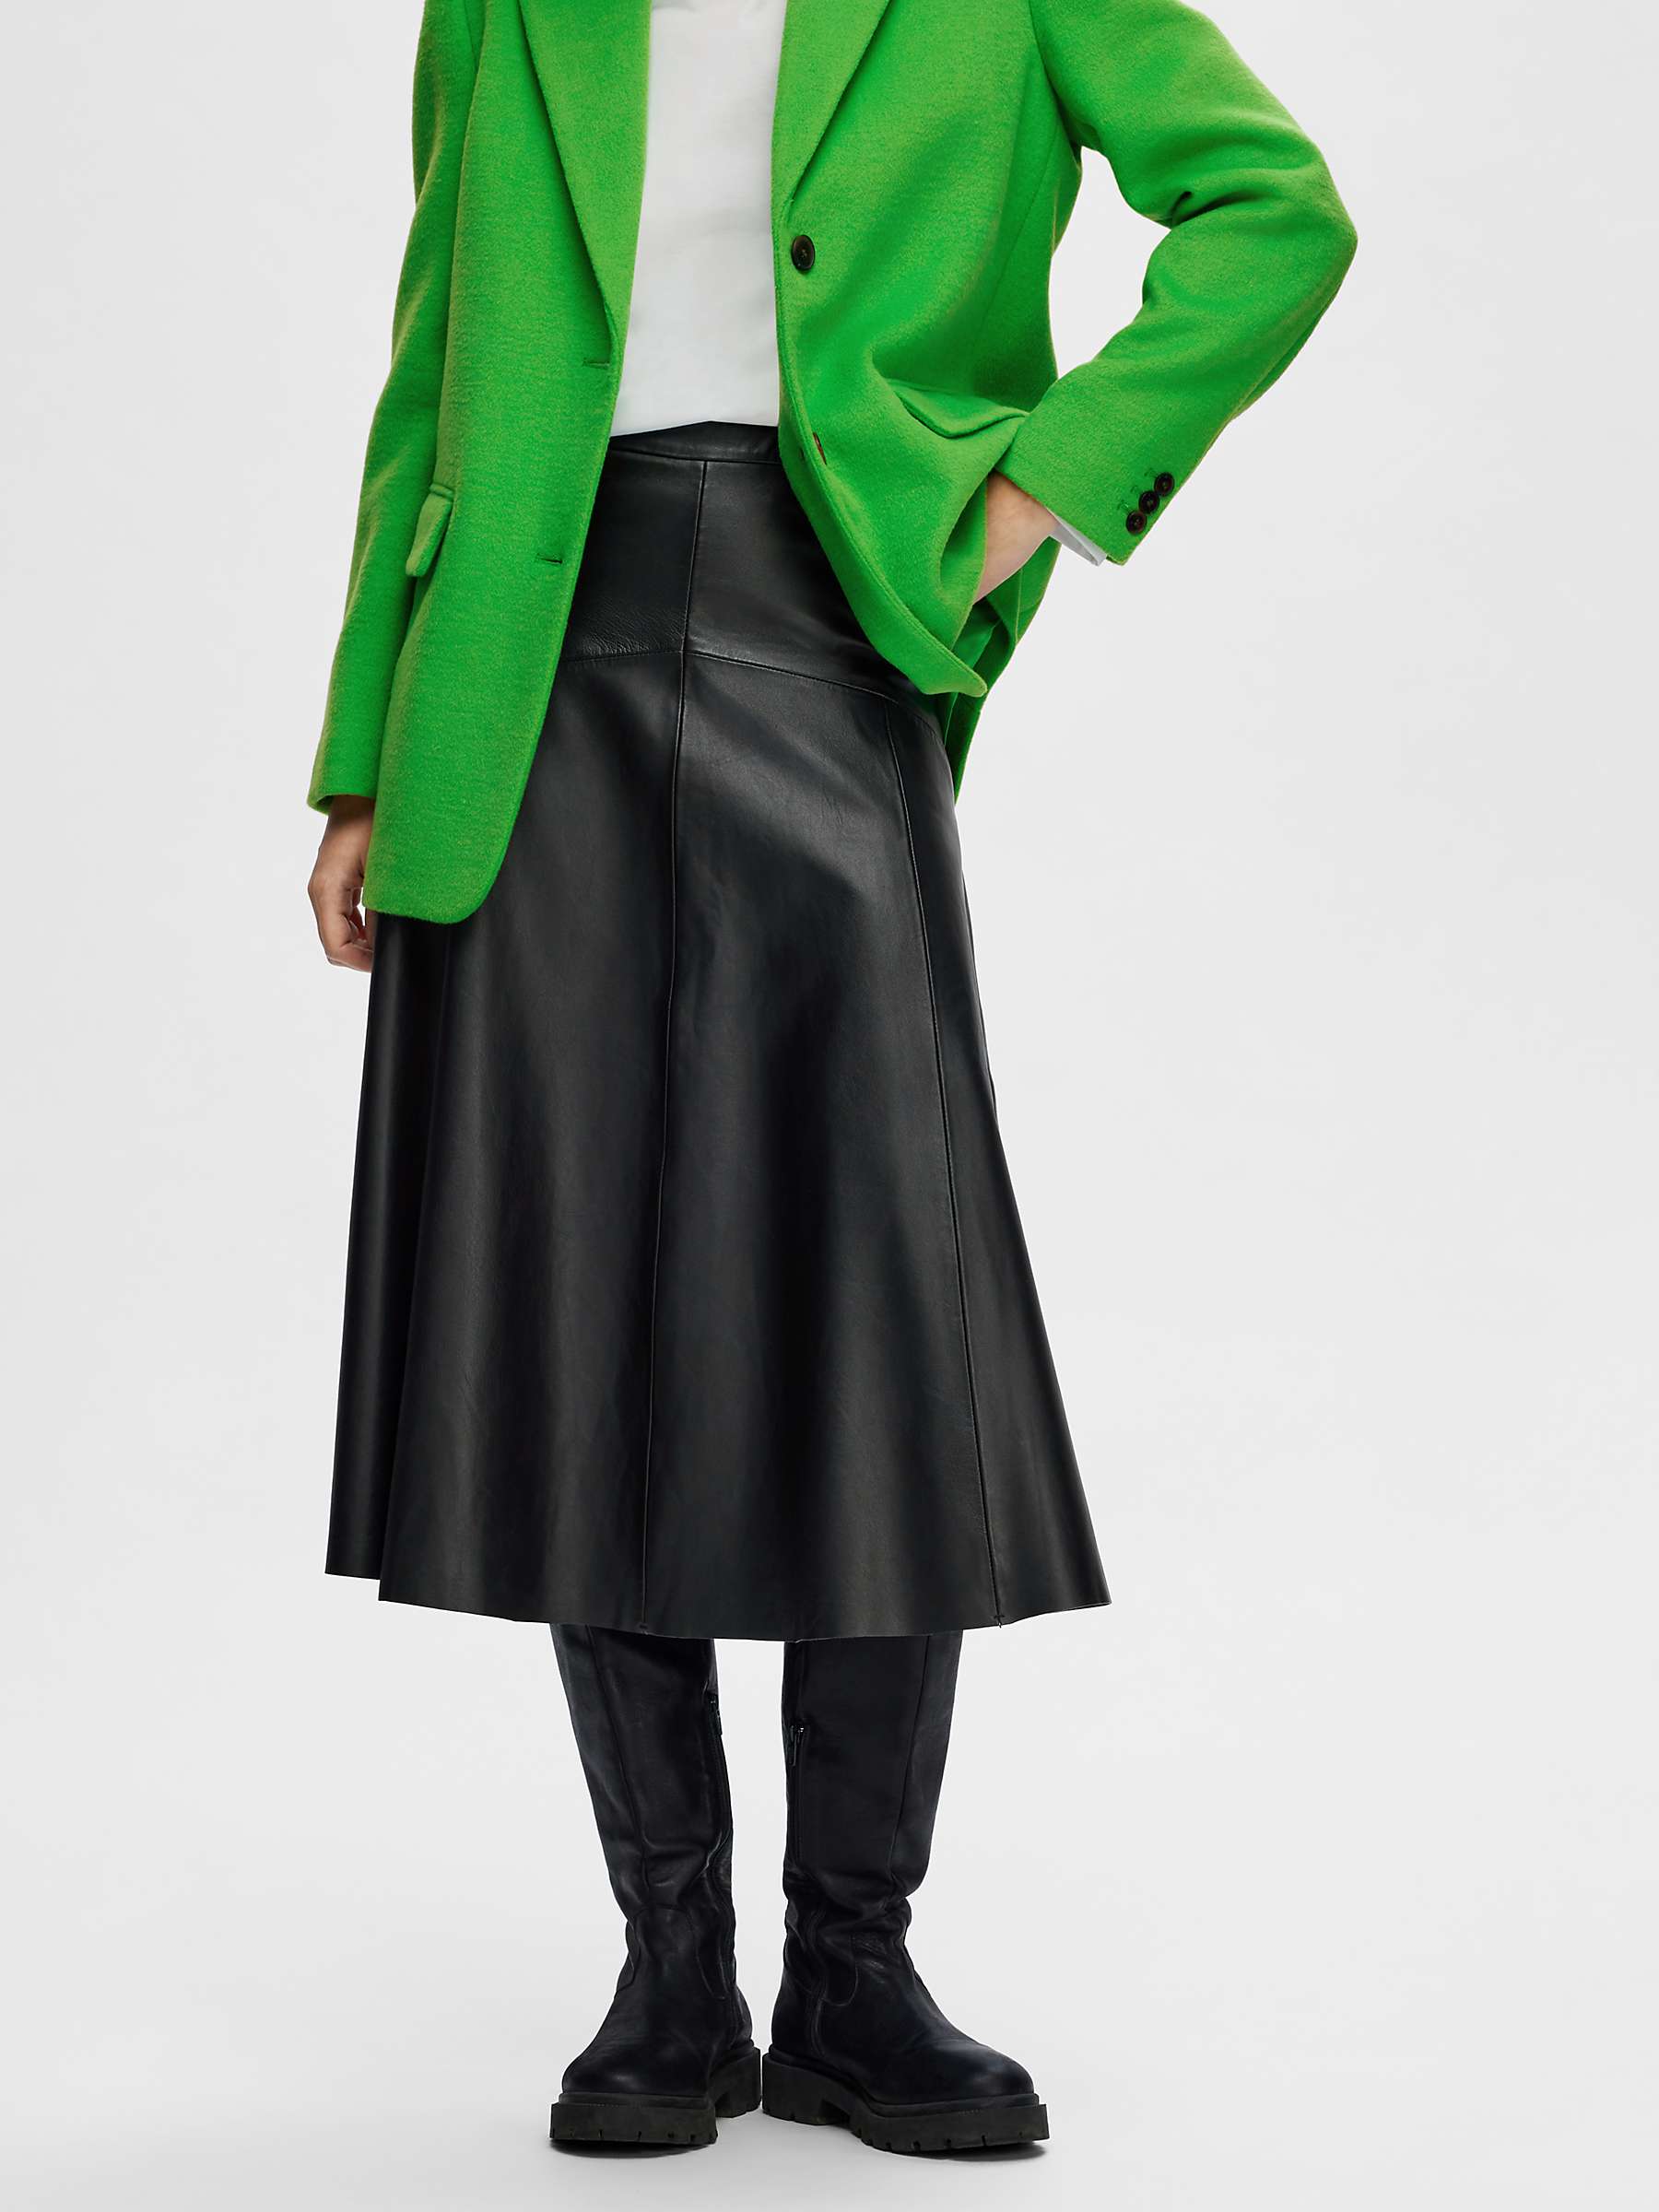 Buy SELECTED FEMME Leather Midi Skirt, Black Online at johnlewis.com